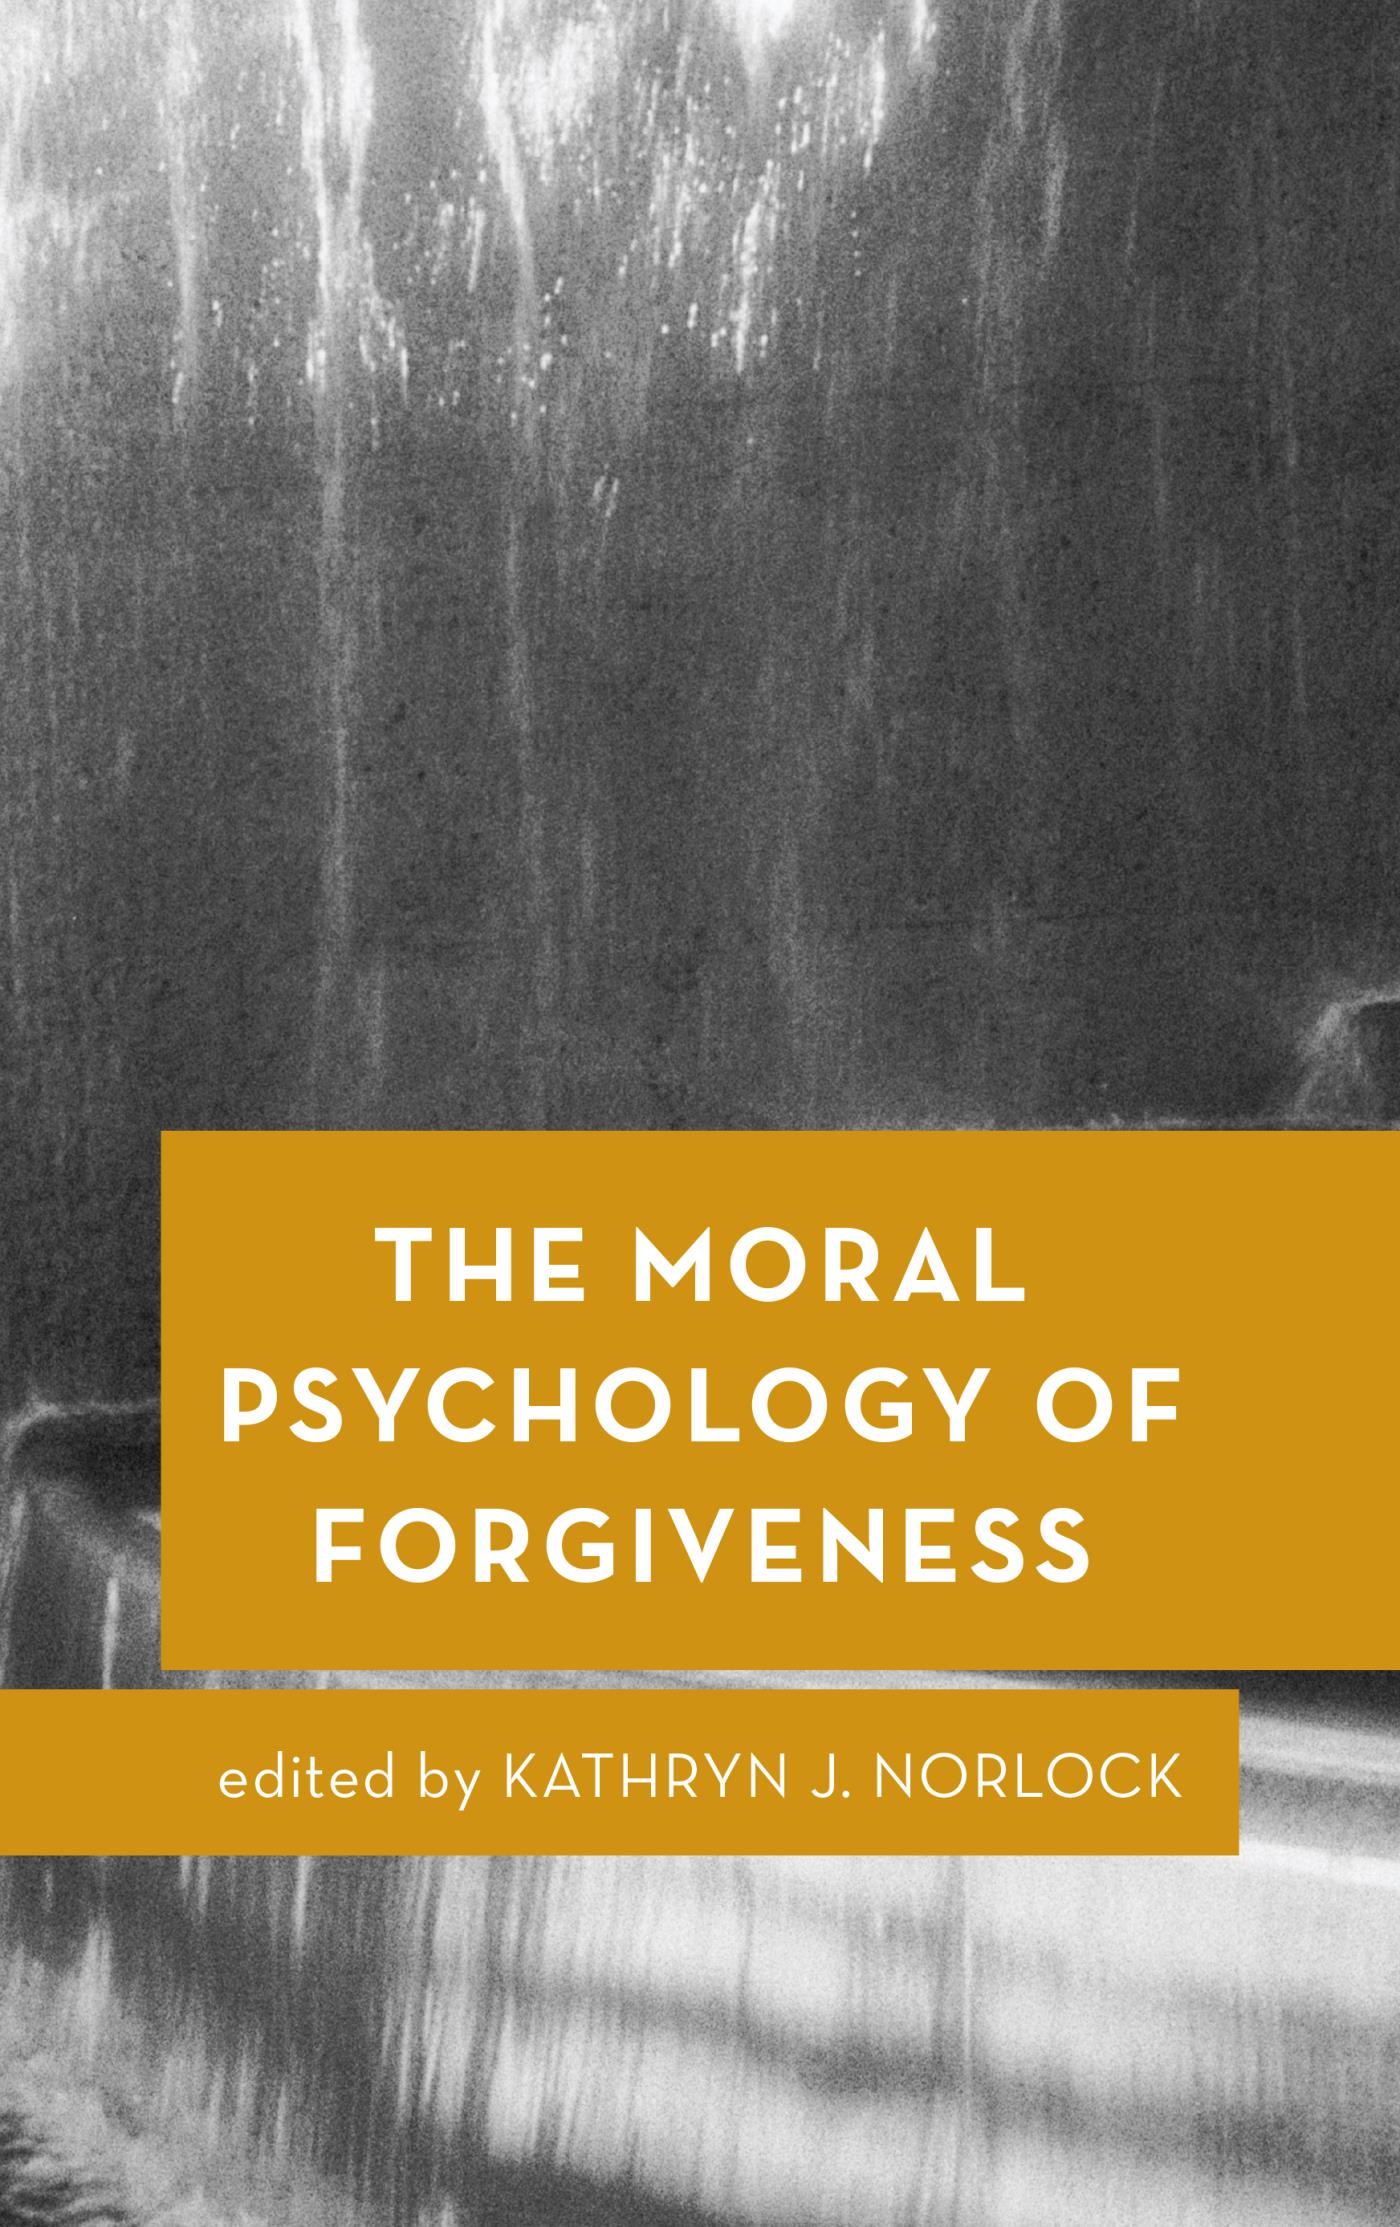 The moral psychology forgiveness